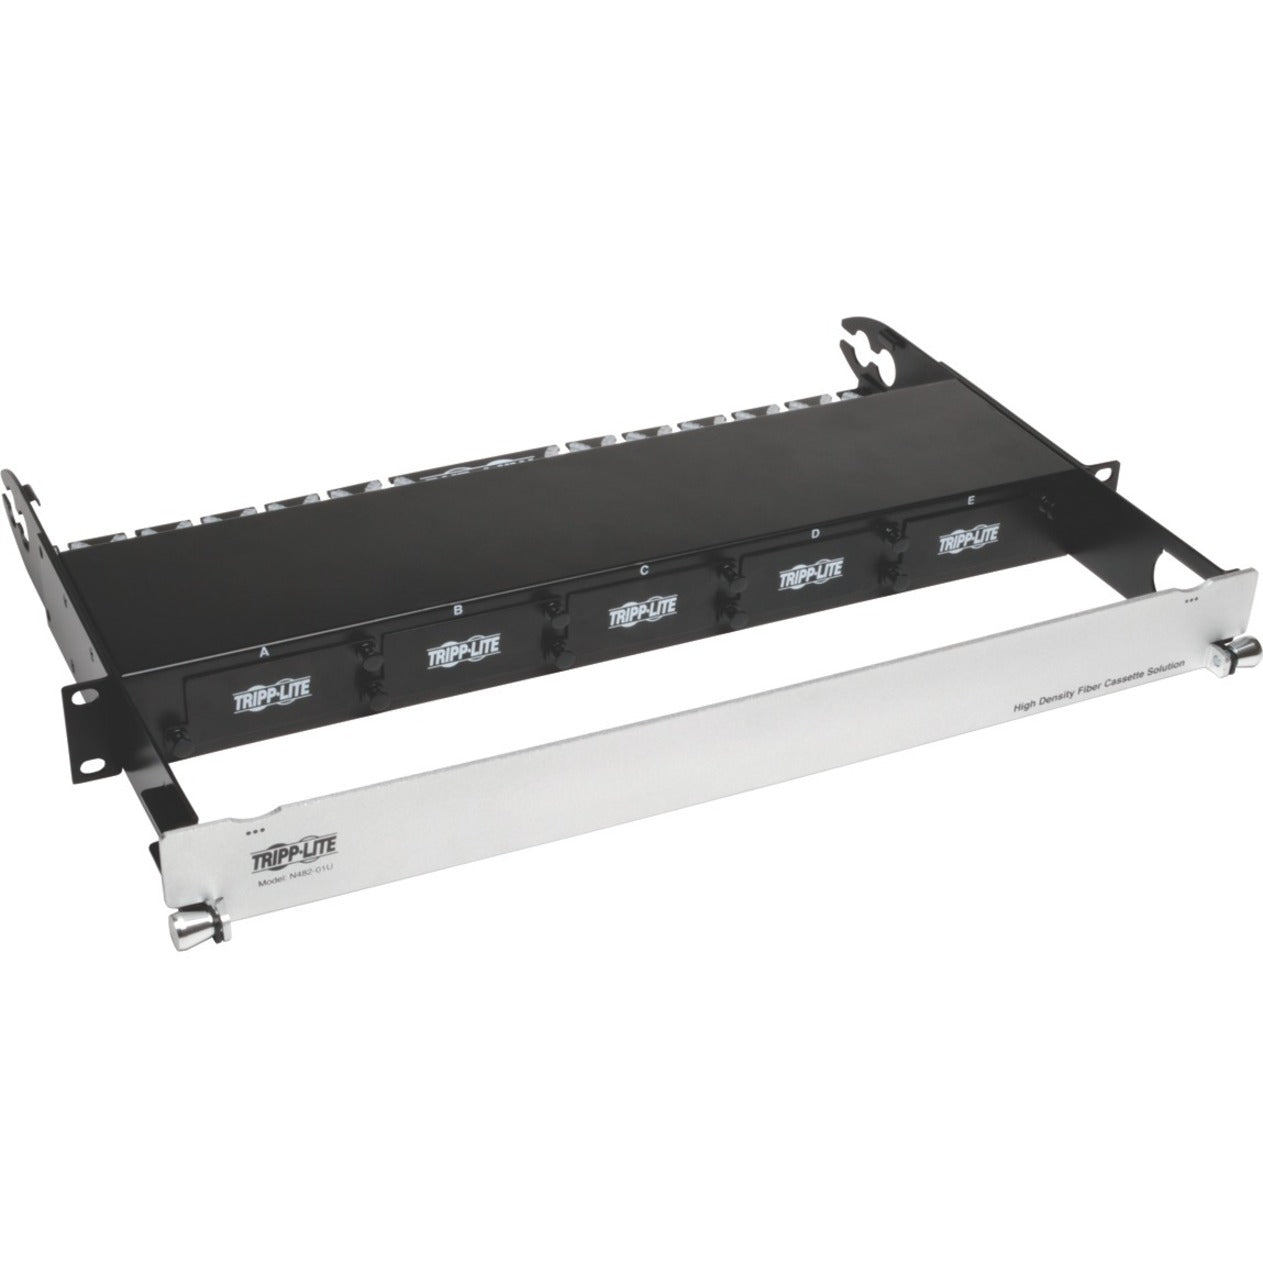 Tripp Lite N482-01U High Density Fiber Enclosure Panel, 1U, 5-Cassette Capacity, Lifetime Warranty